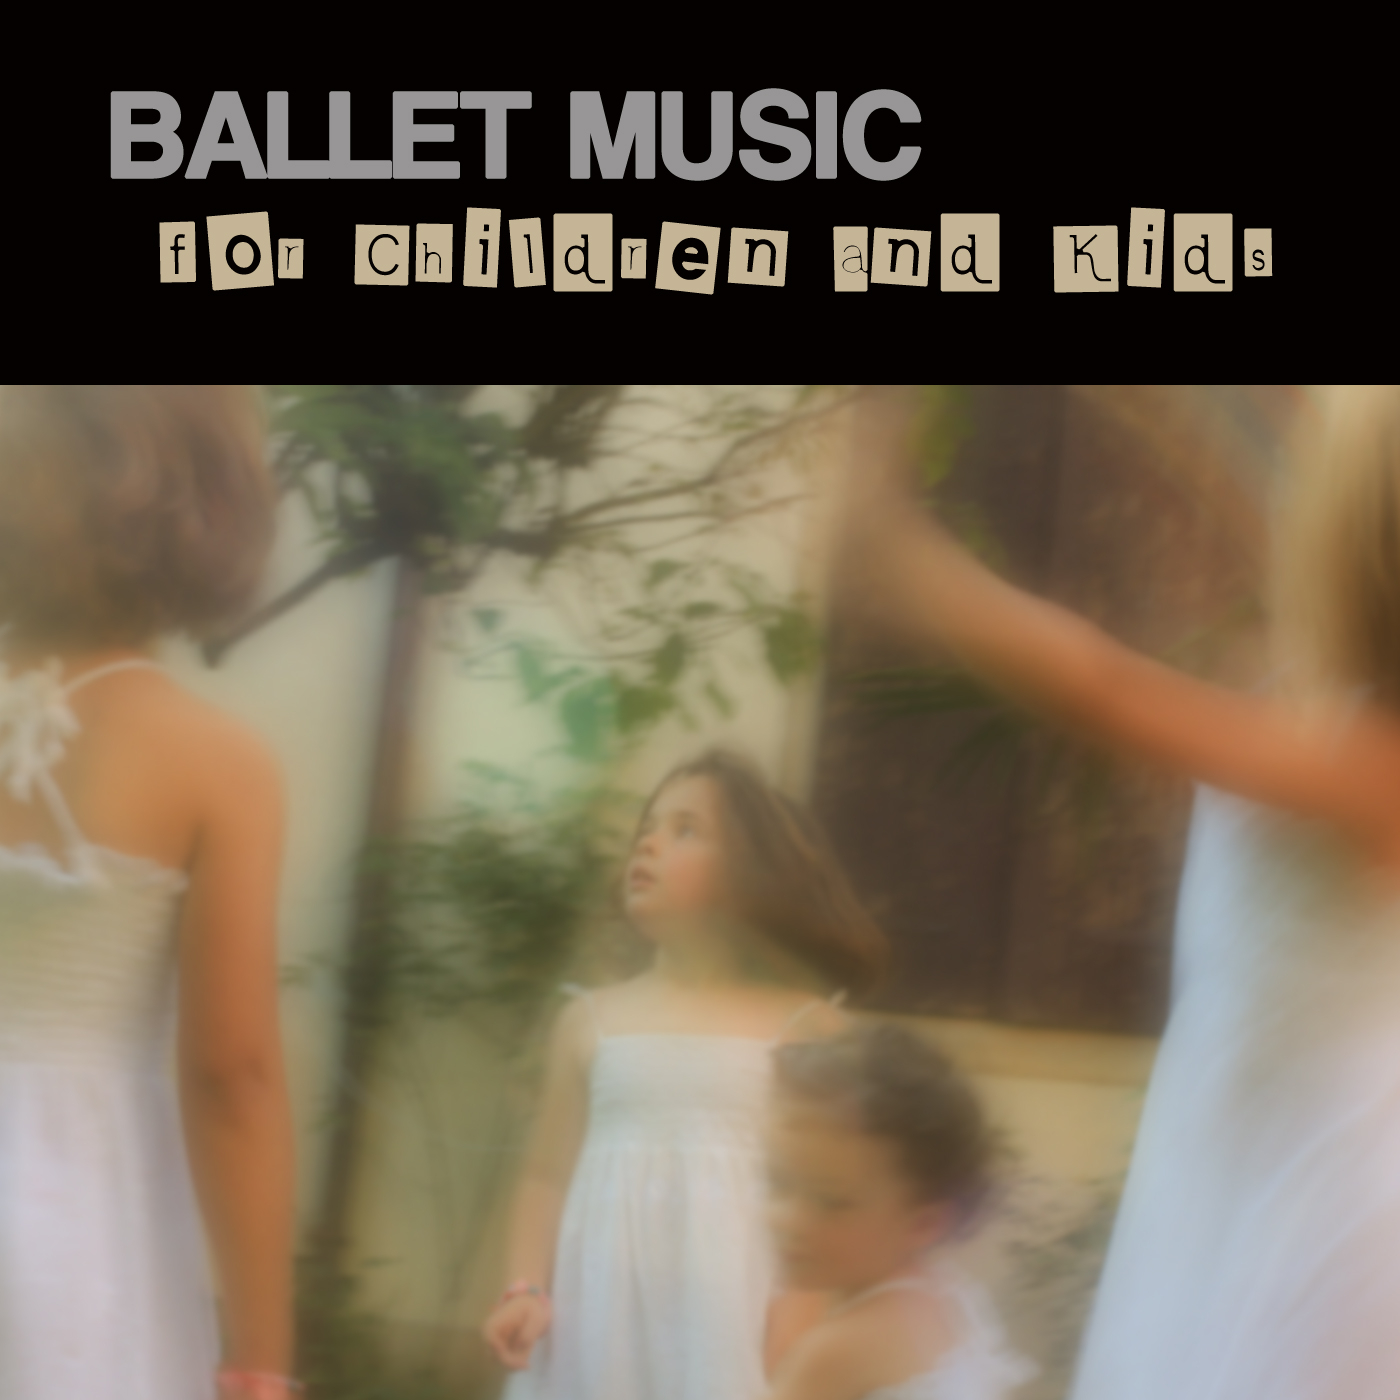 Piano Song - Ballet for Children